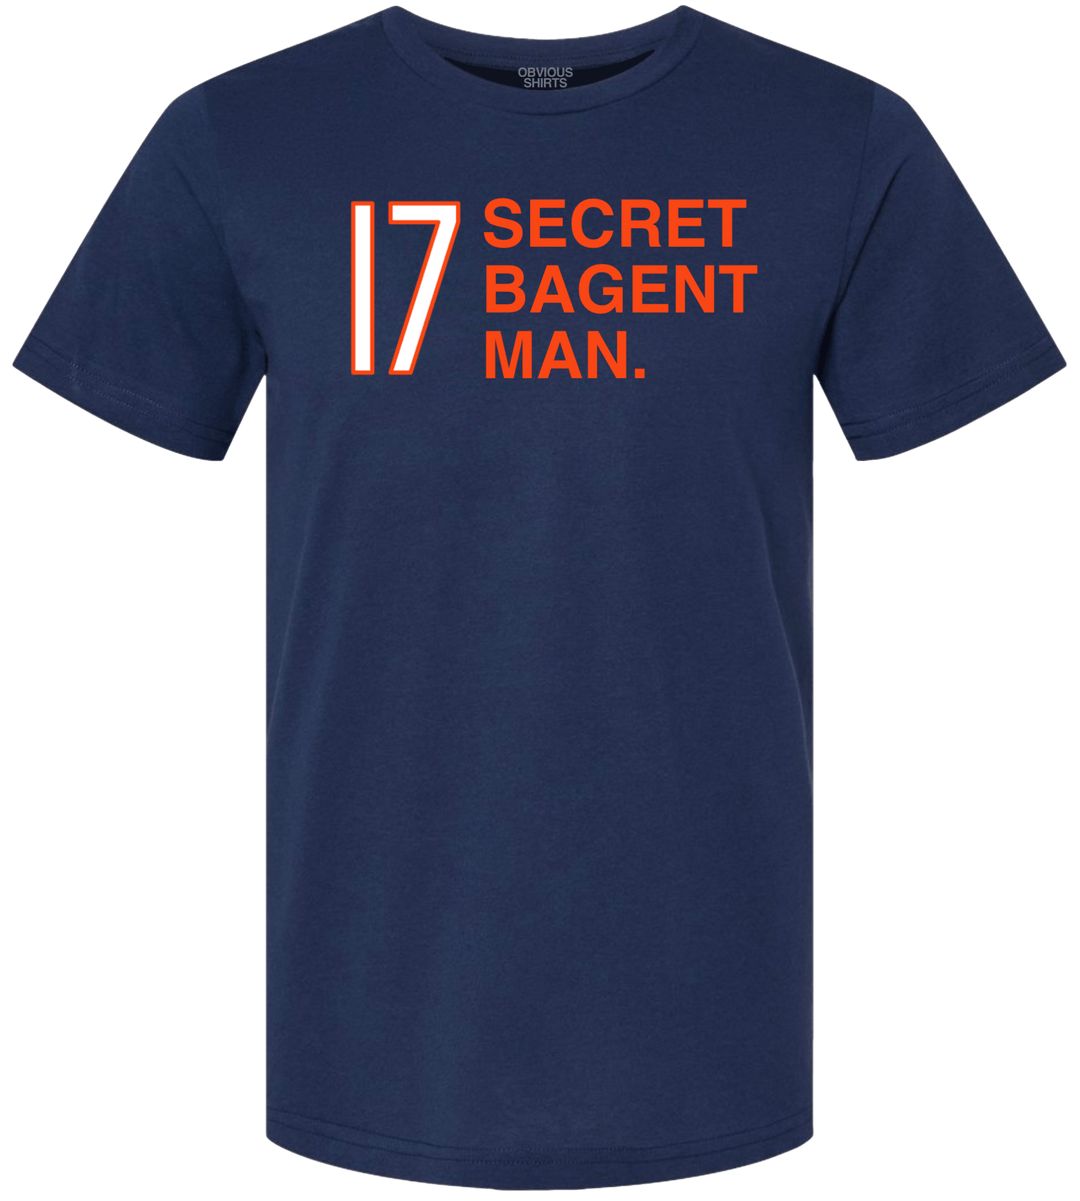 SECRET BAGENT MAN. - OBVIOUS SHIRTS